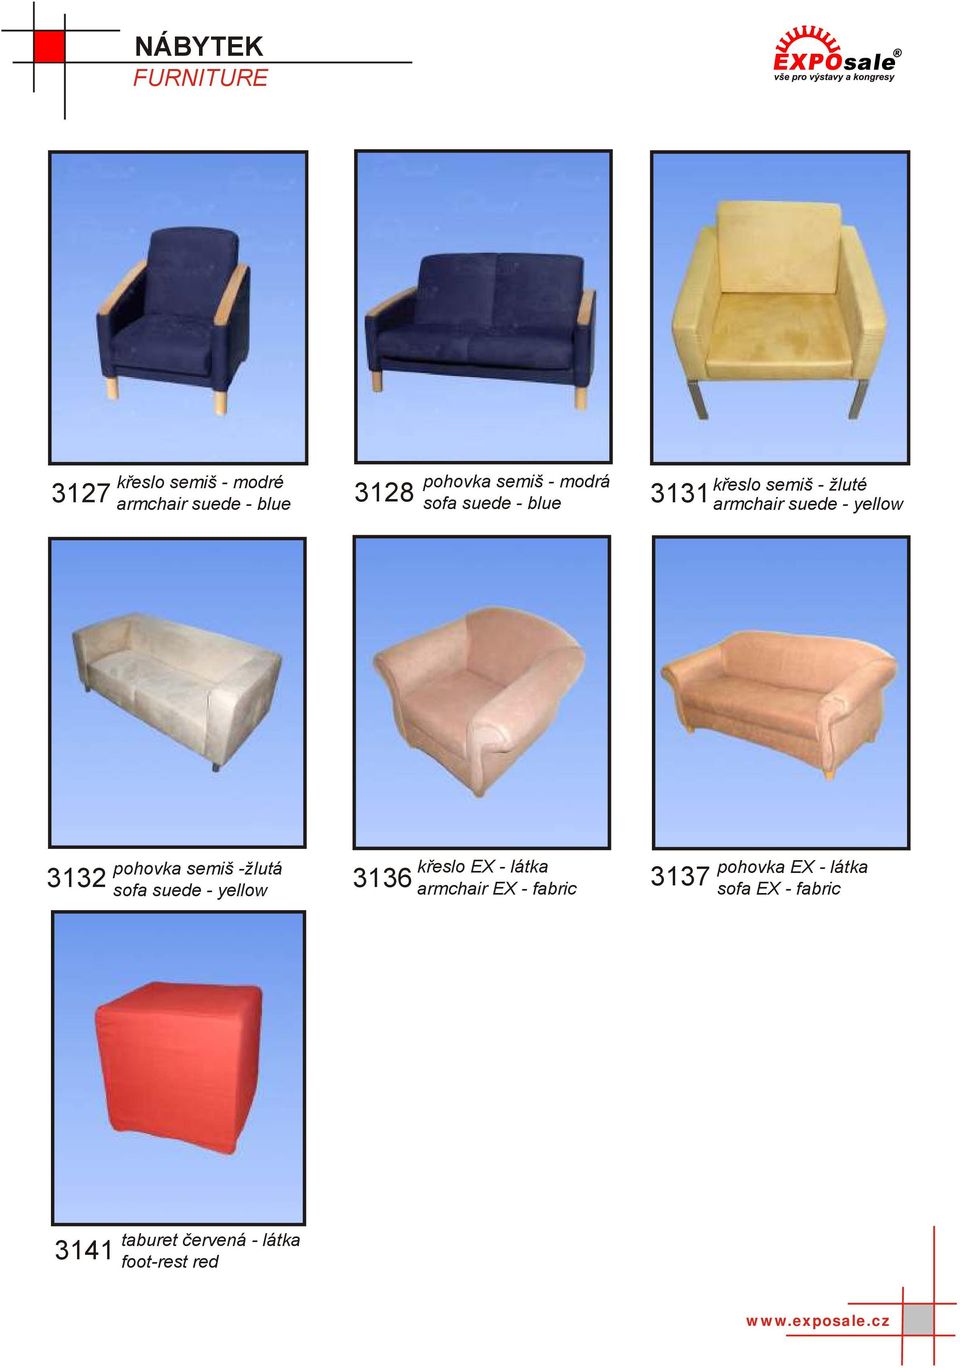 pohovka semiš -žlutá 3132 sofa suede - yellow křeslo EX - látka 3136 armchair EX -